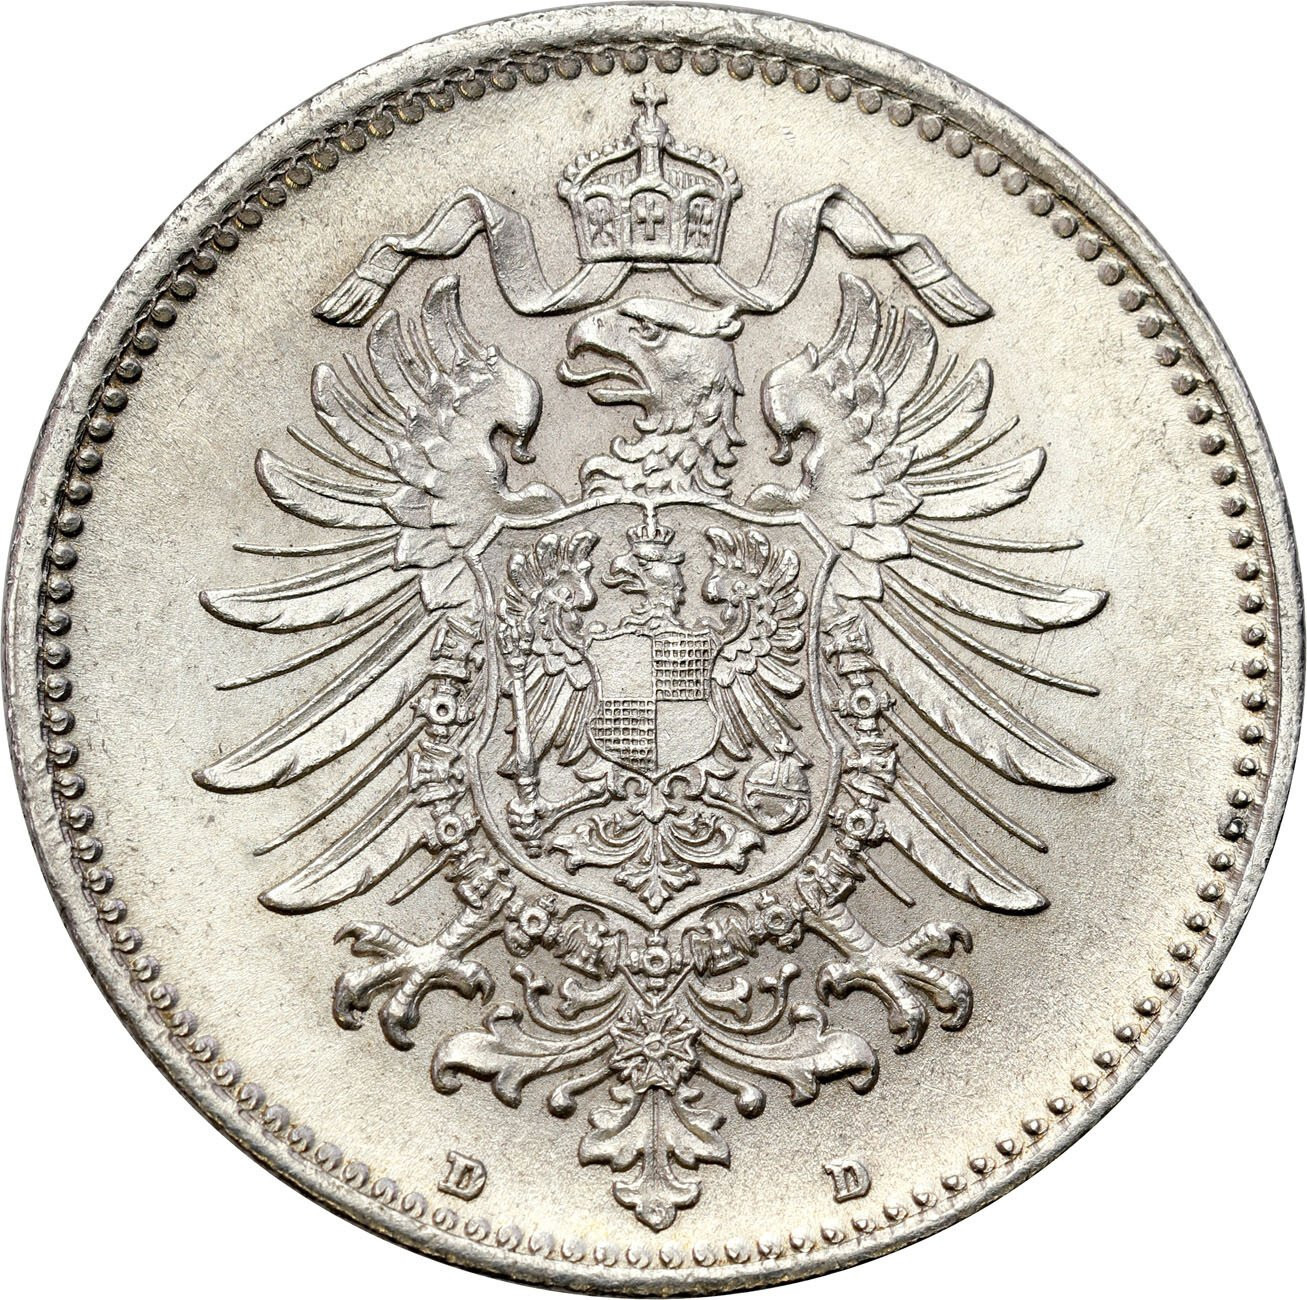 Niemcy - Cesarstwo Niemieckie. 1 marka 1875, D Monachium – PIĘKNE